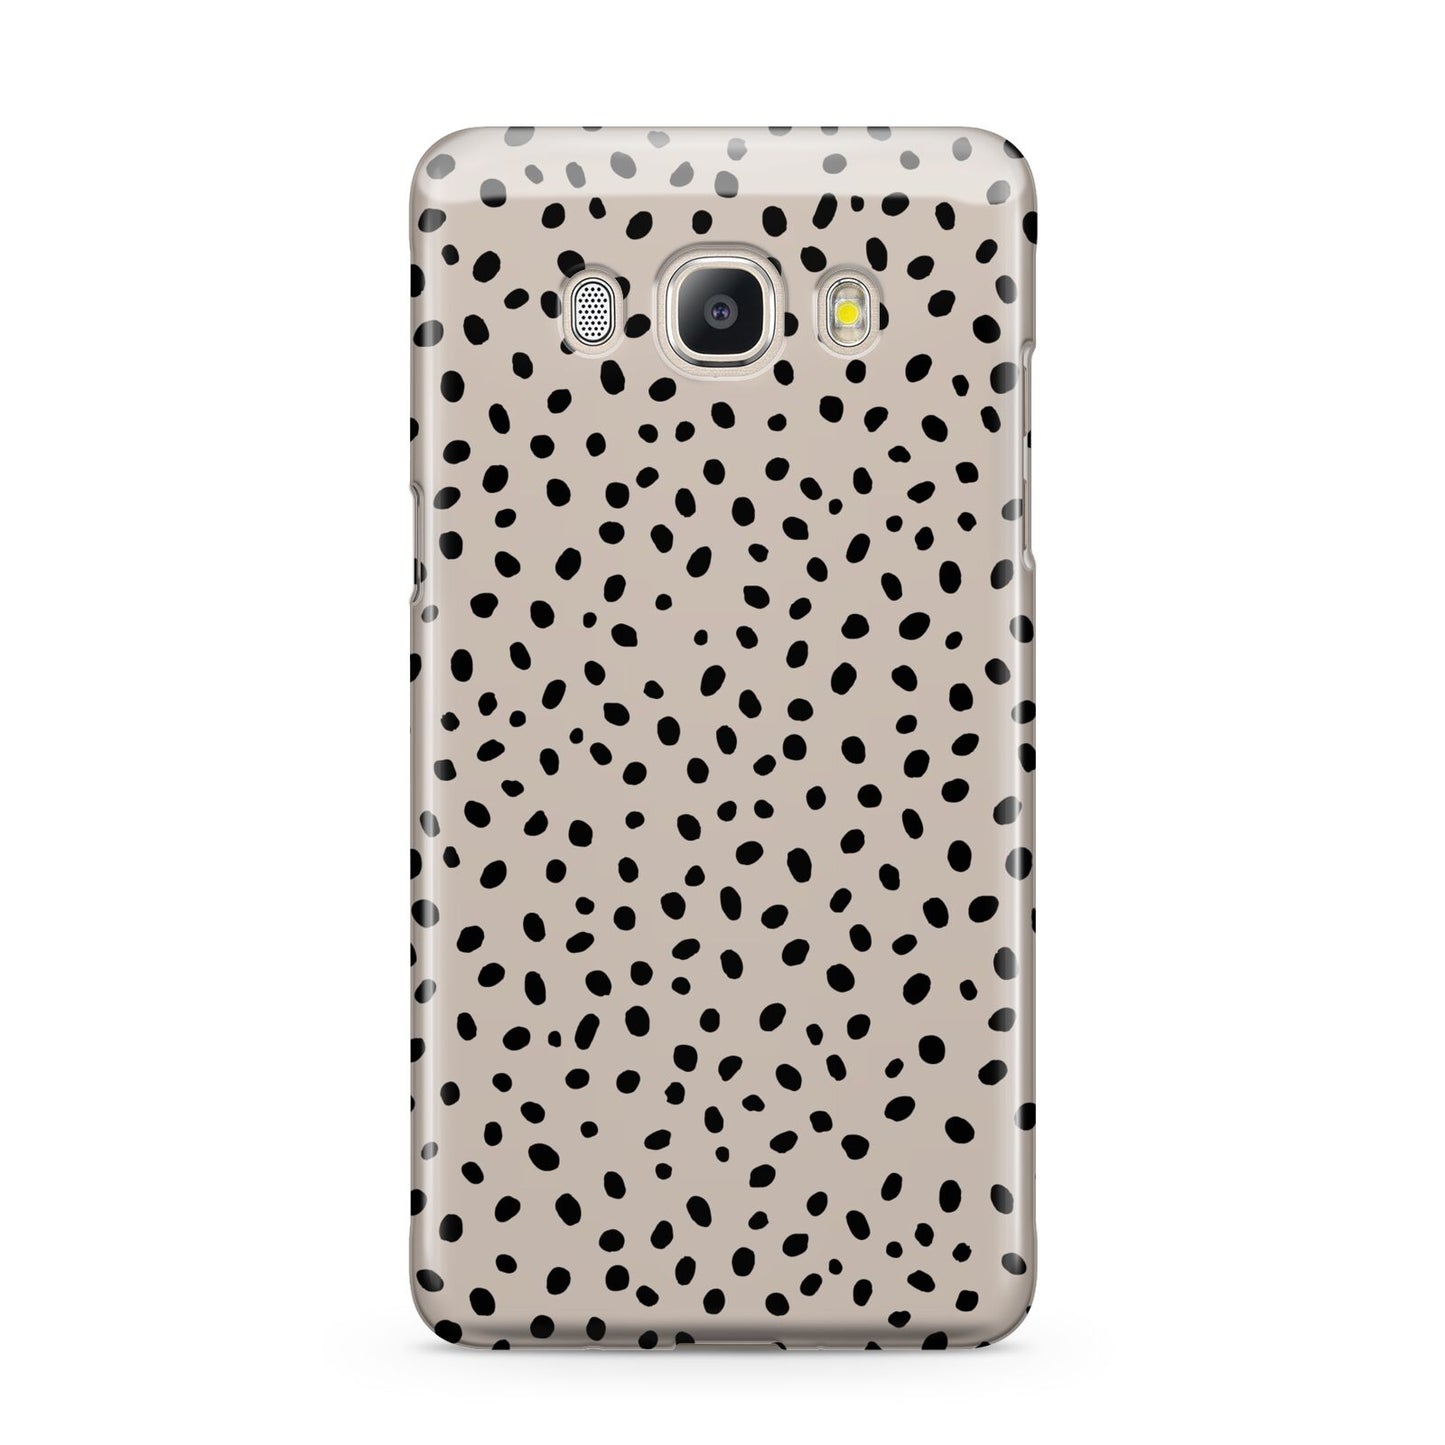 Almond Polka Dot Samsung Galaxy J5 2016 Case